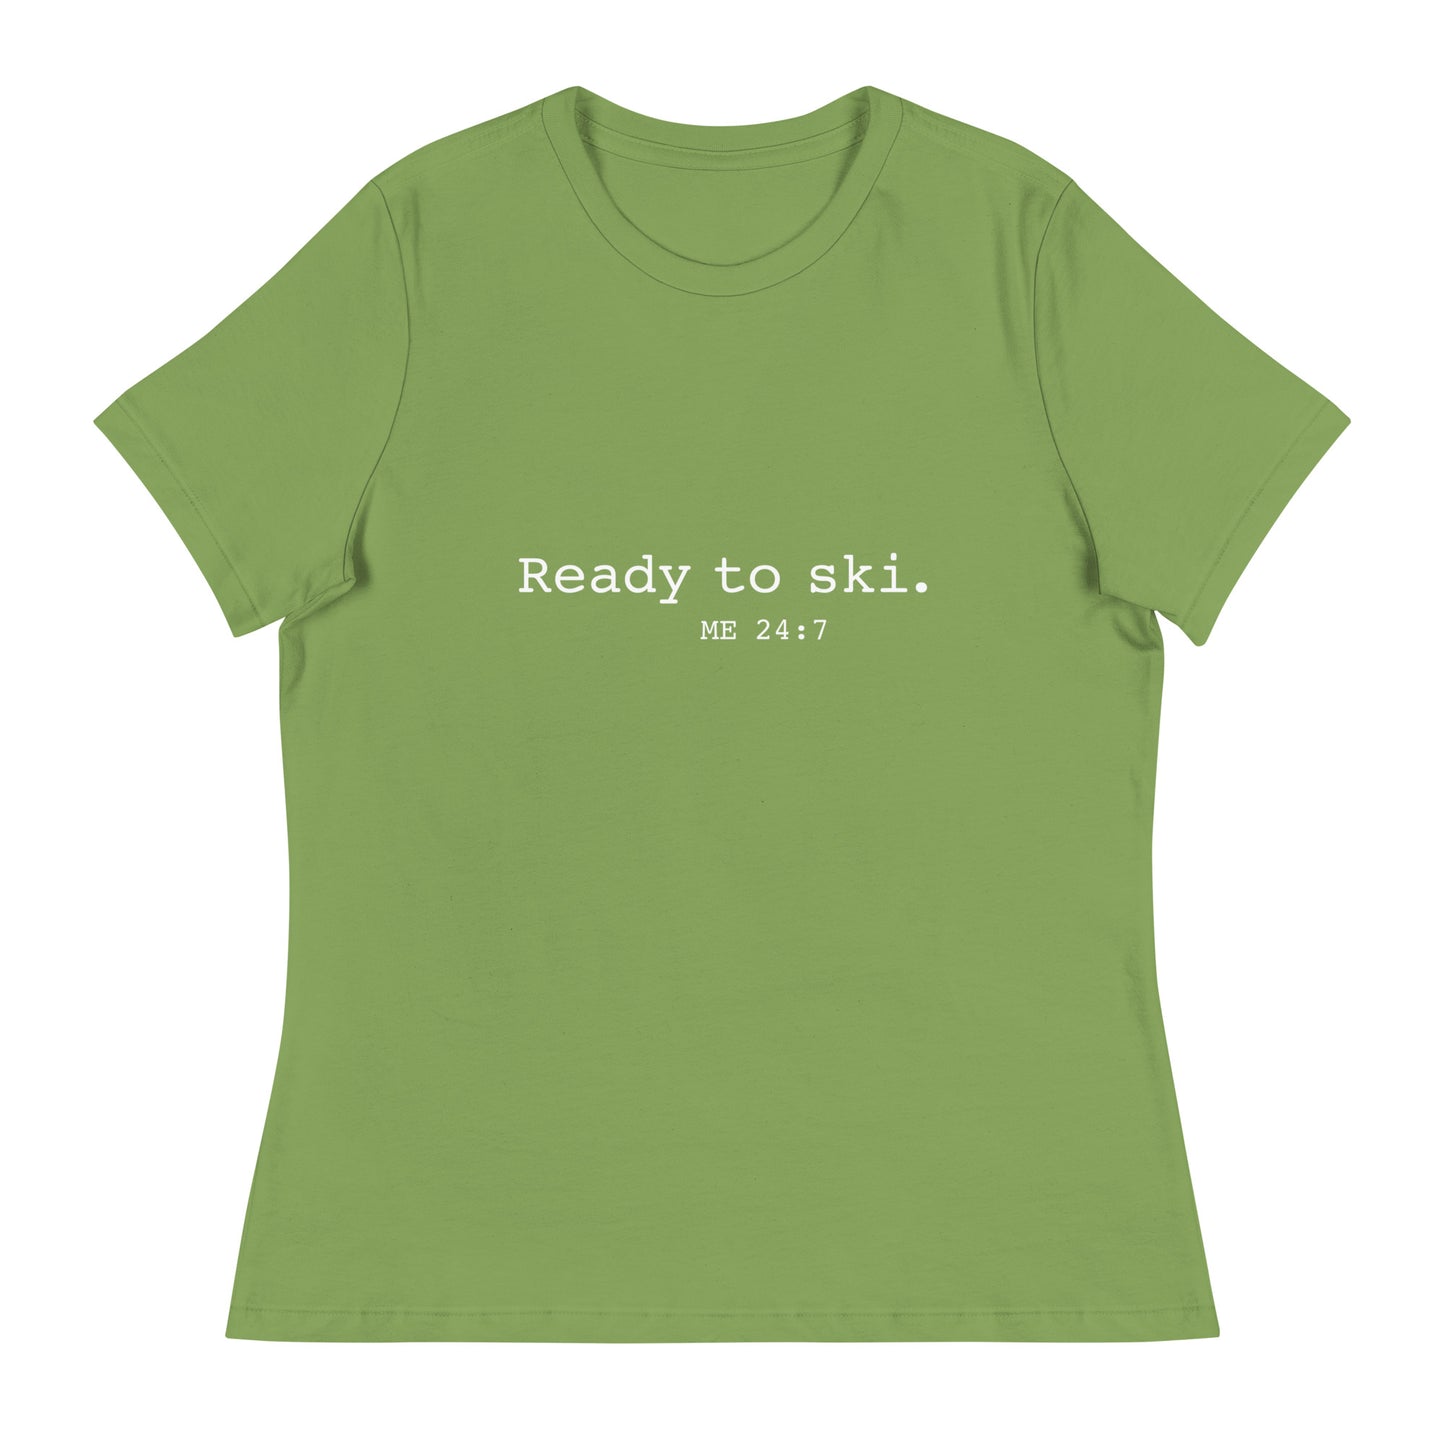 CS0070 - 02001 - Ready to ski. Women's Relaxed T-Shirt